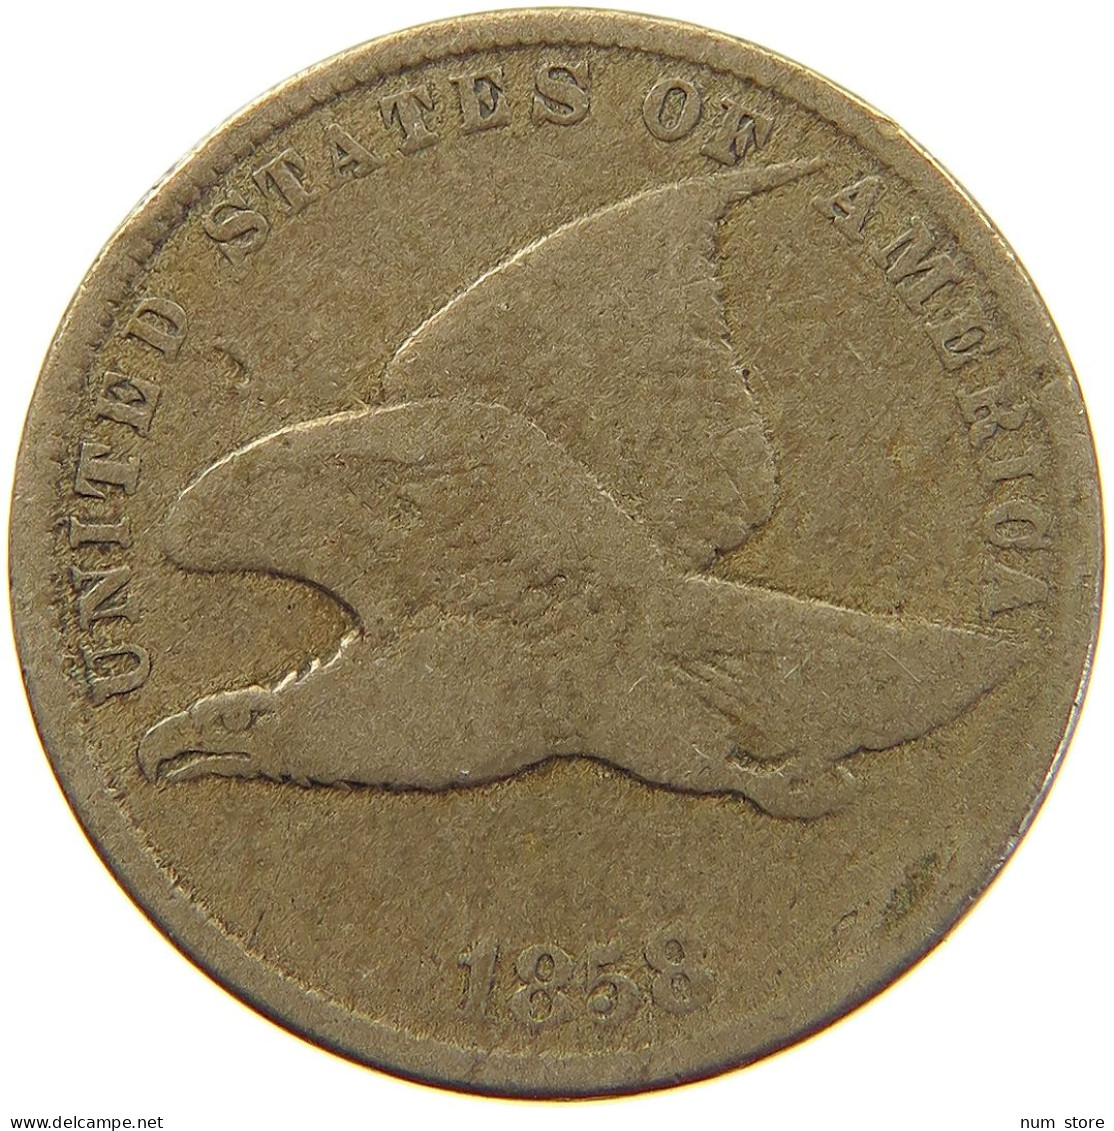 UNITED STATES OF AMERICA CENT 1858 FLYING EAGLE #c062 0233 - 1856-1858: Flying Eagle